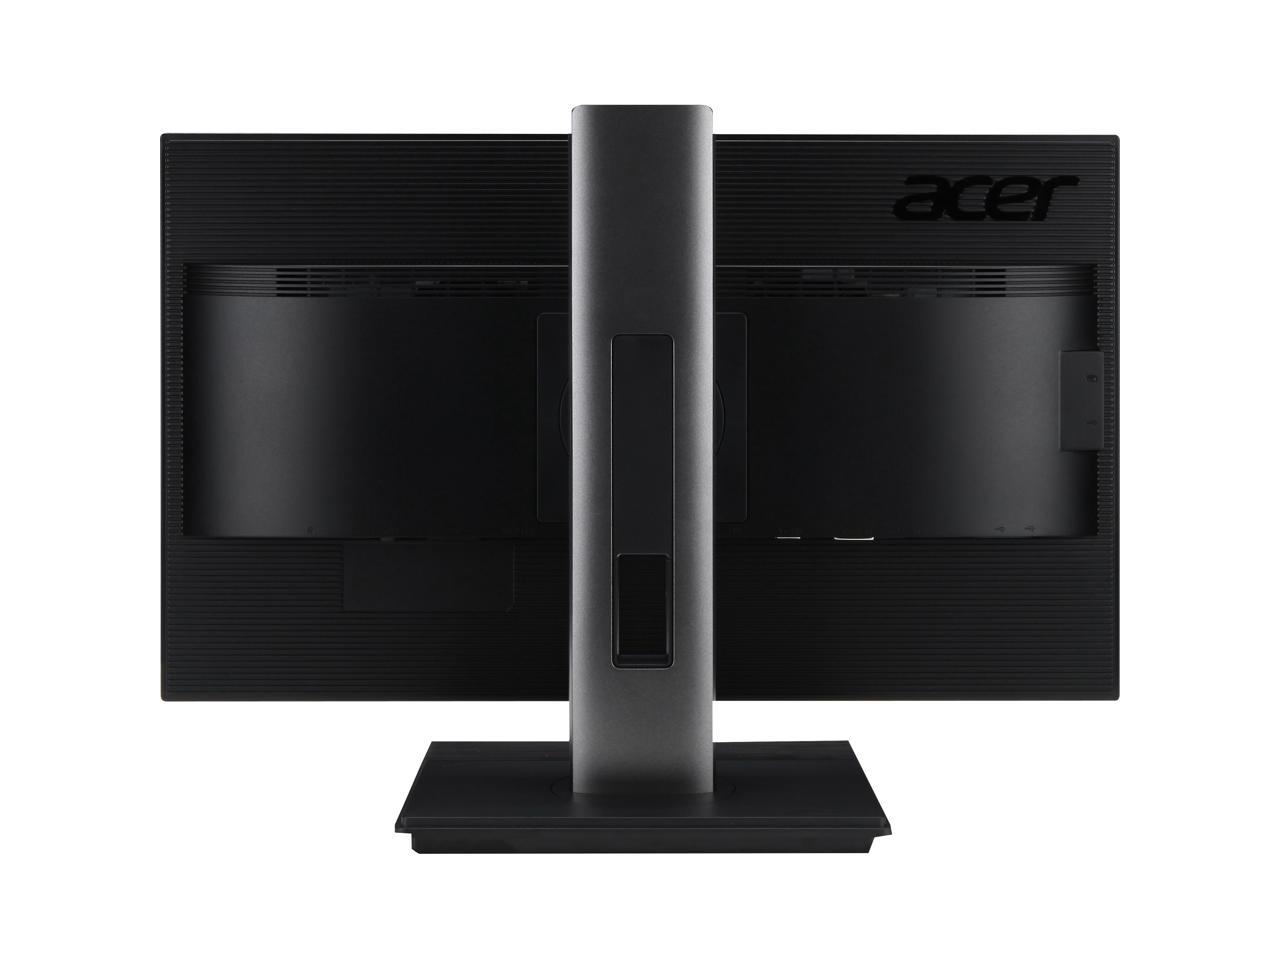 Acer B226HQL ymiprx UM.WB6AA.003 21.5" Full HD 1920 x 1080 5 ms D-Sub, HDMI, DisplayPort Built-in Speakers LCD/LED Monitor